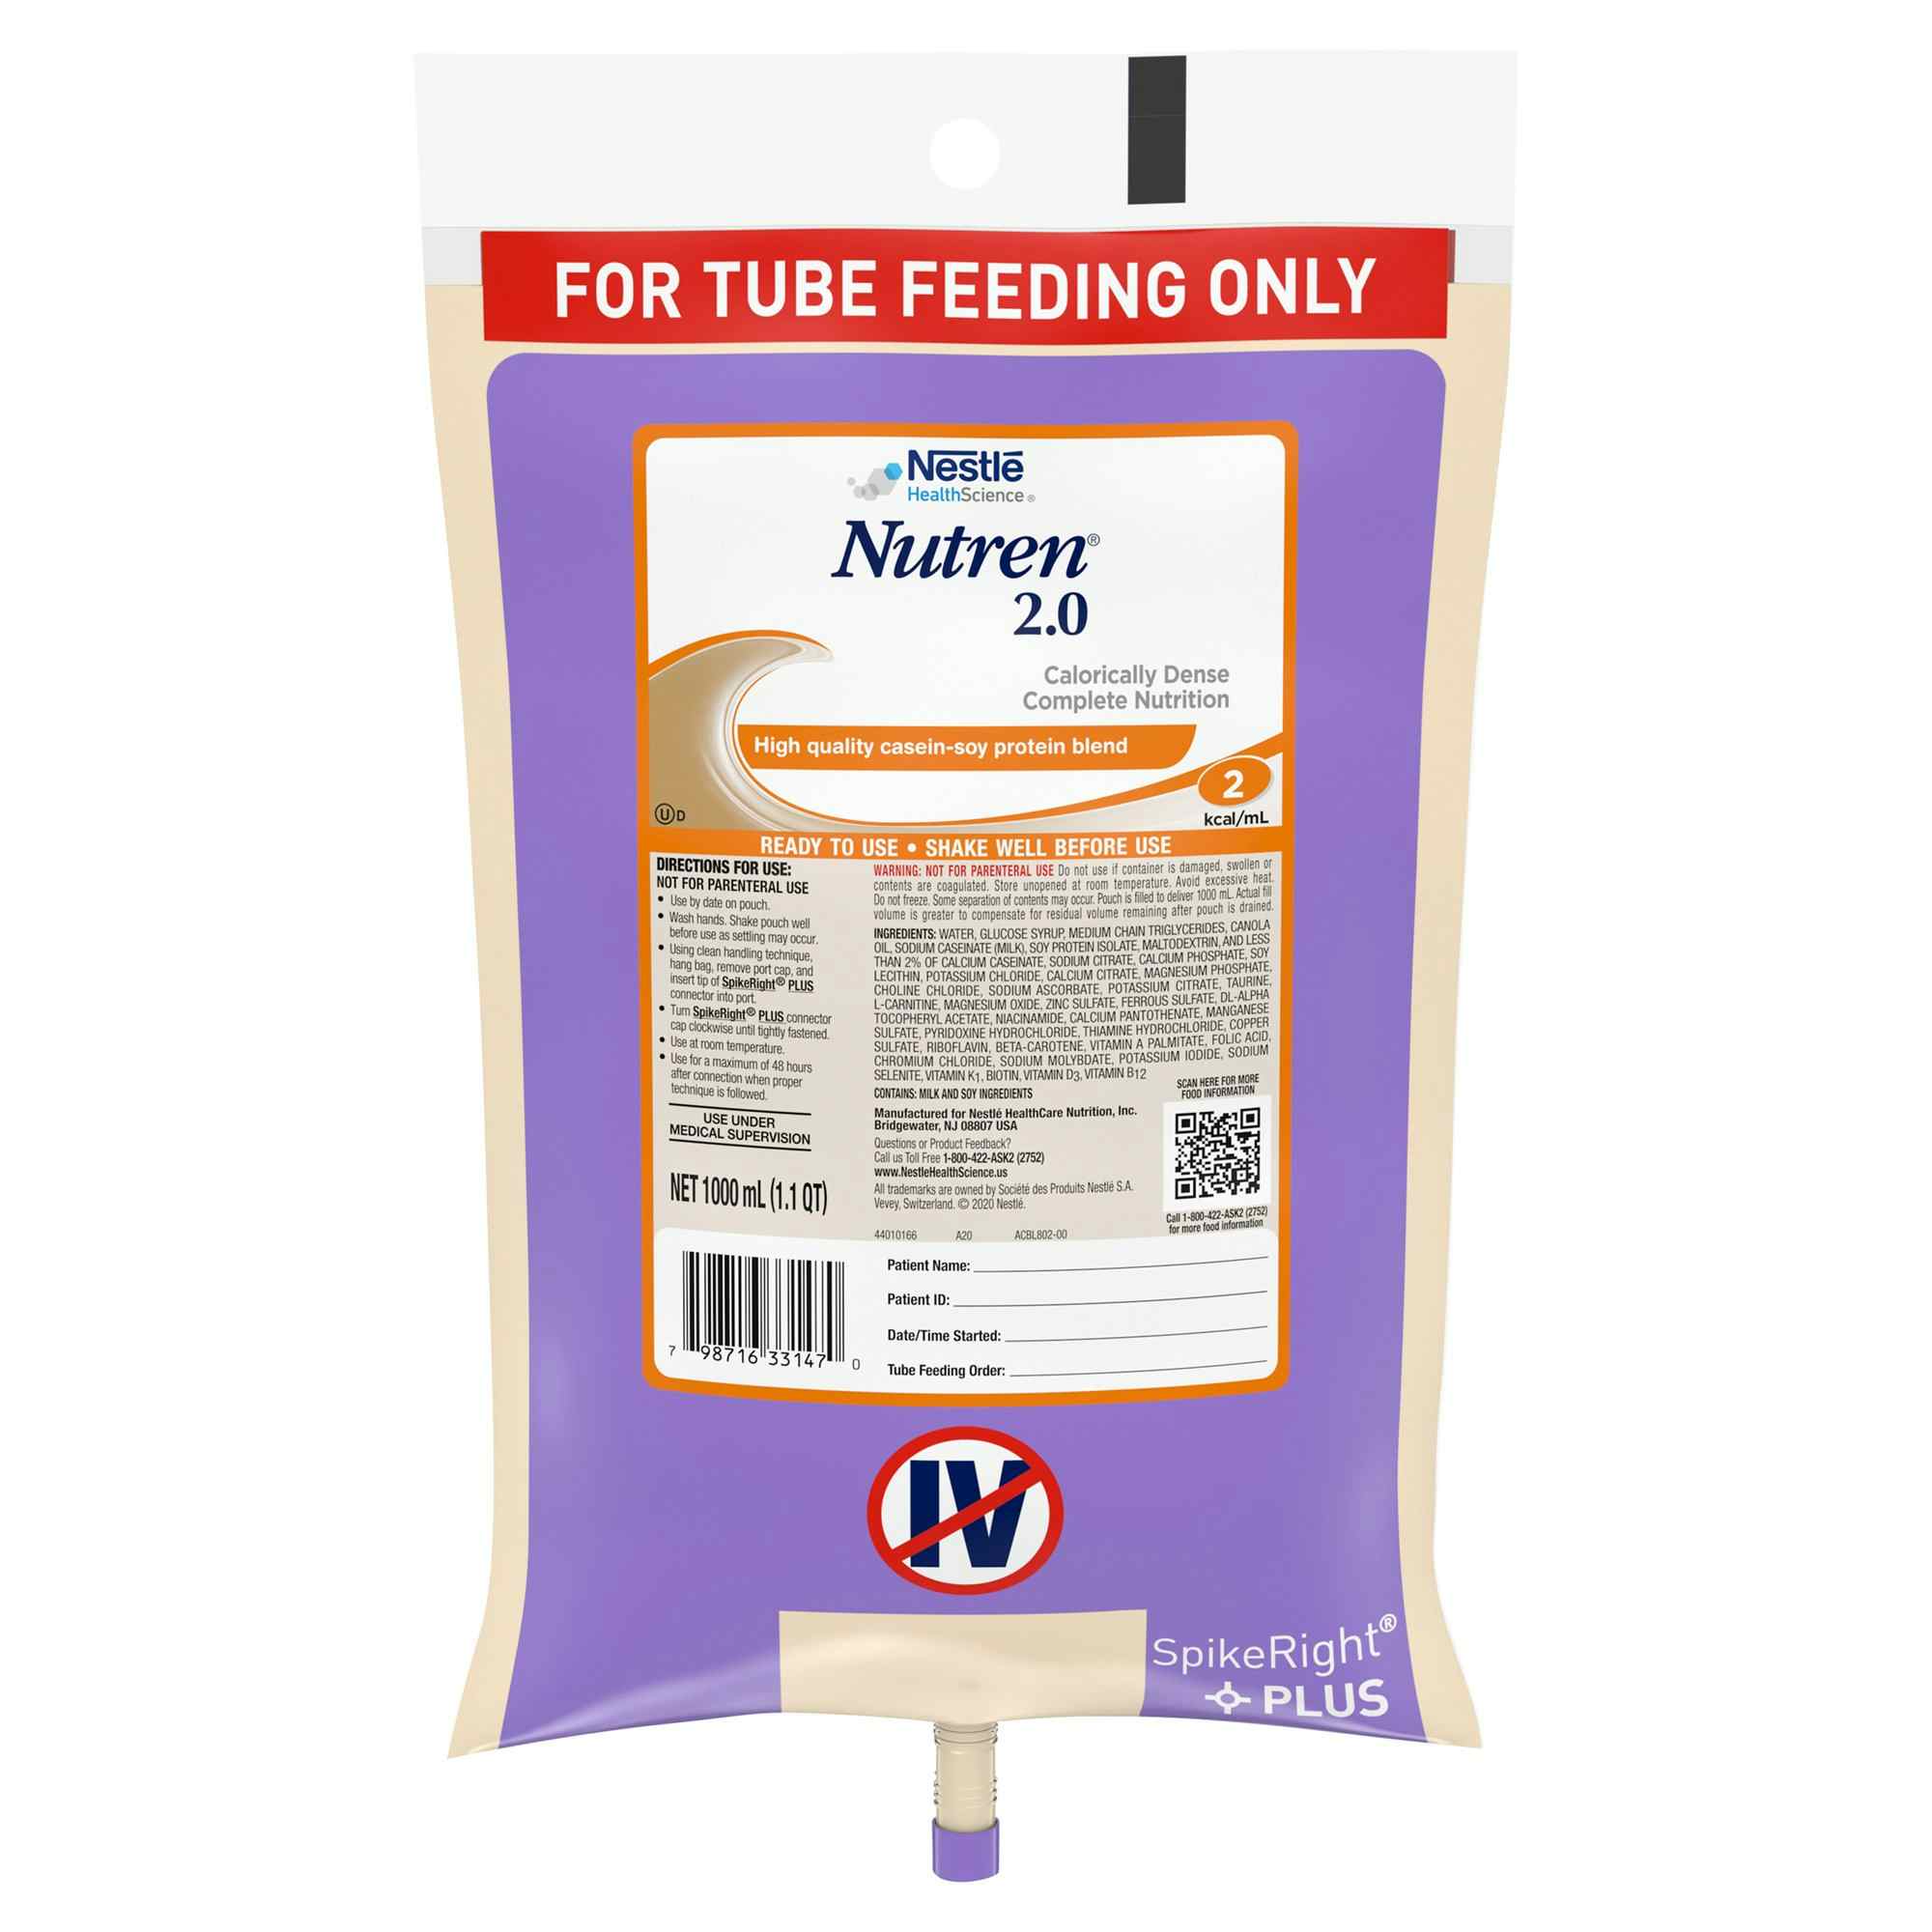 Nestle HealthScience Nutren 2.0 Calorically Dense Complete Nutrition Tube Feeding Formula, 33.8 oz., 00798716441469, 1 Each